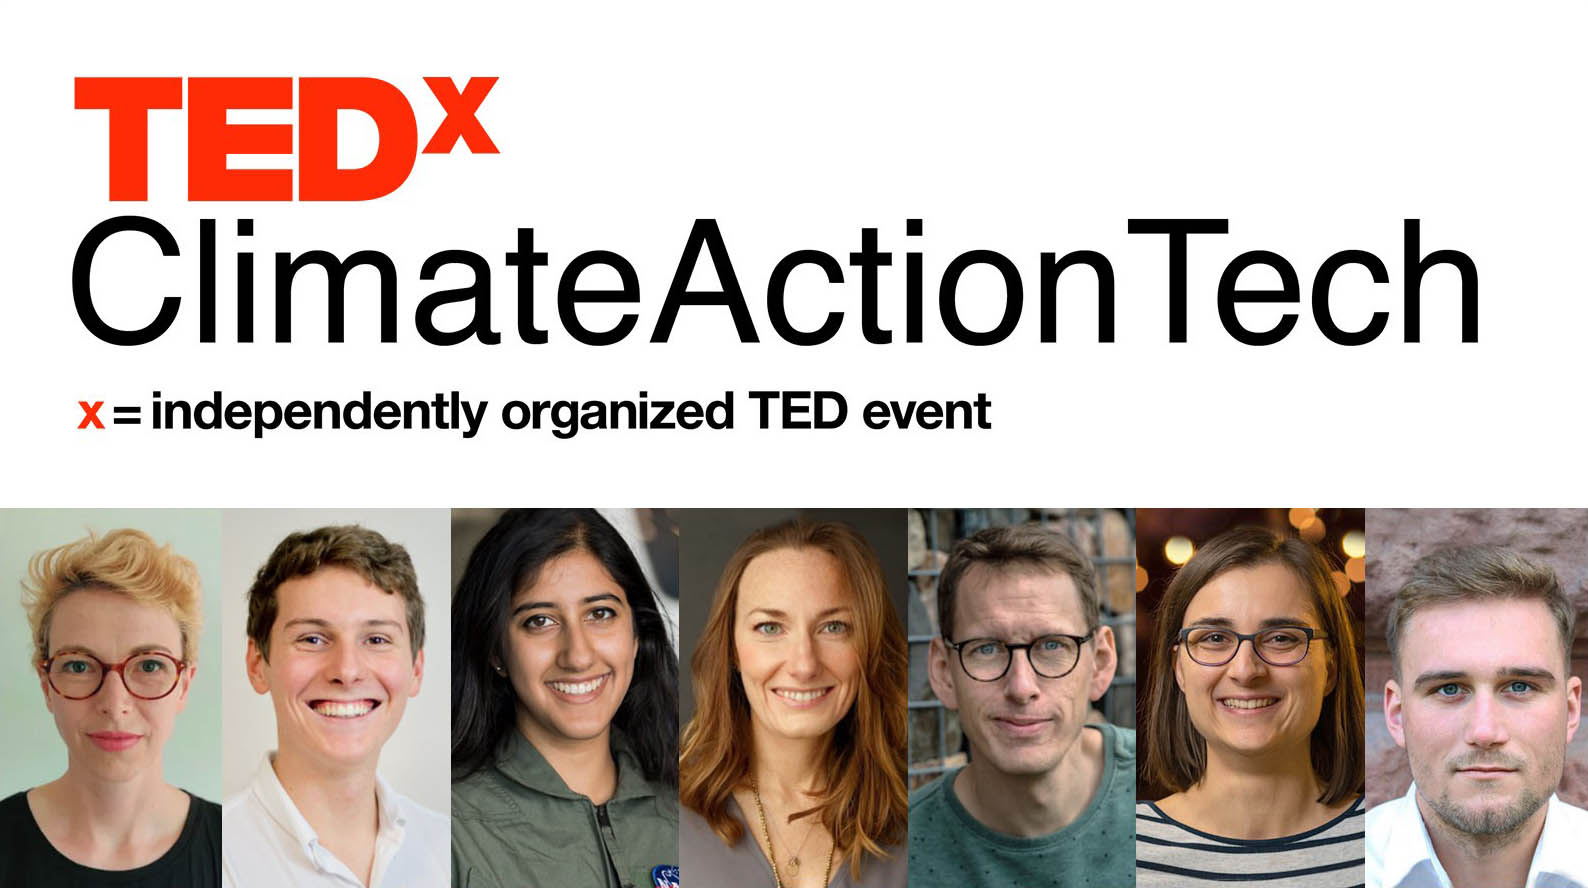 A flyer for TEDxClimateActionTech